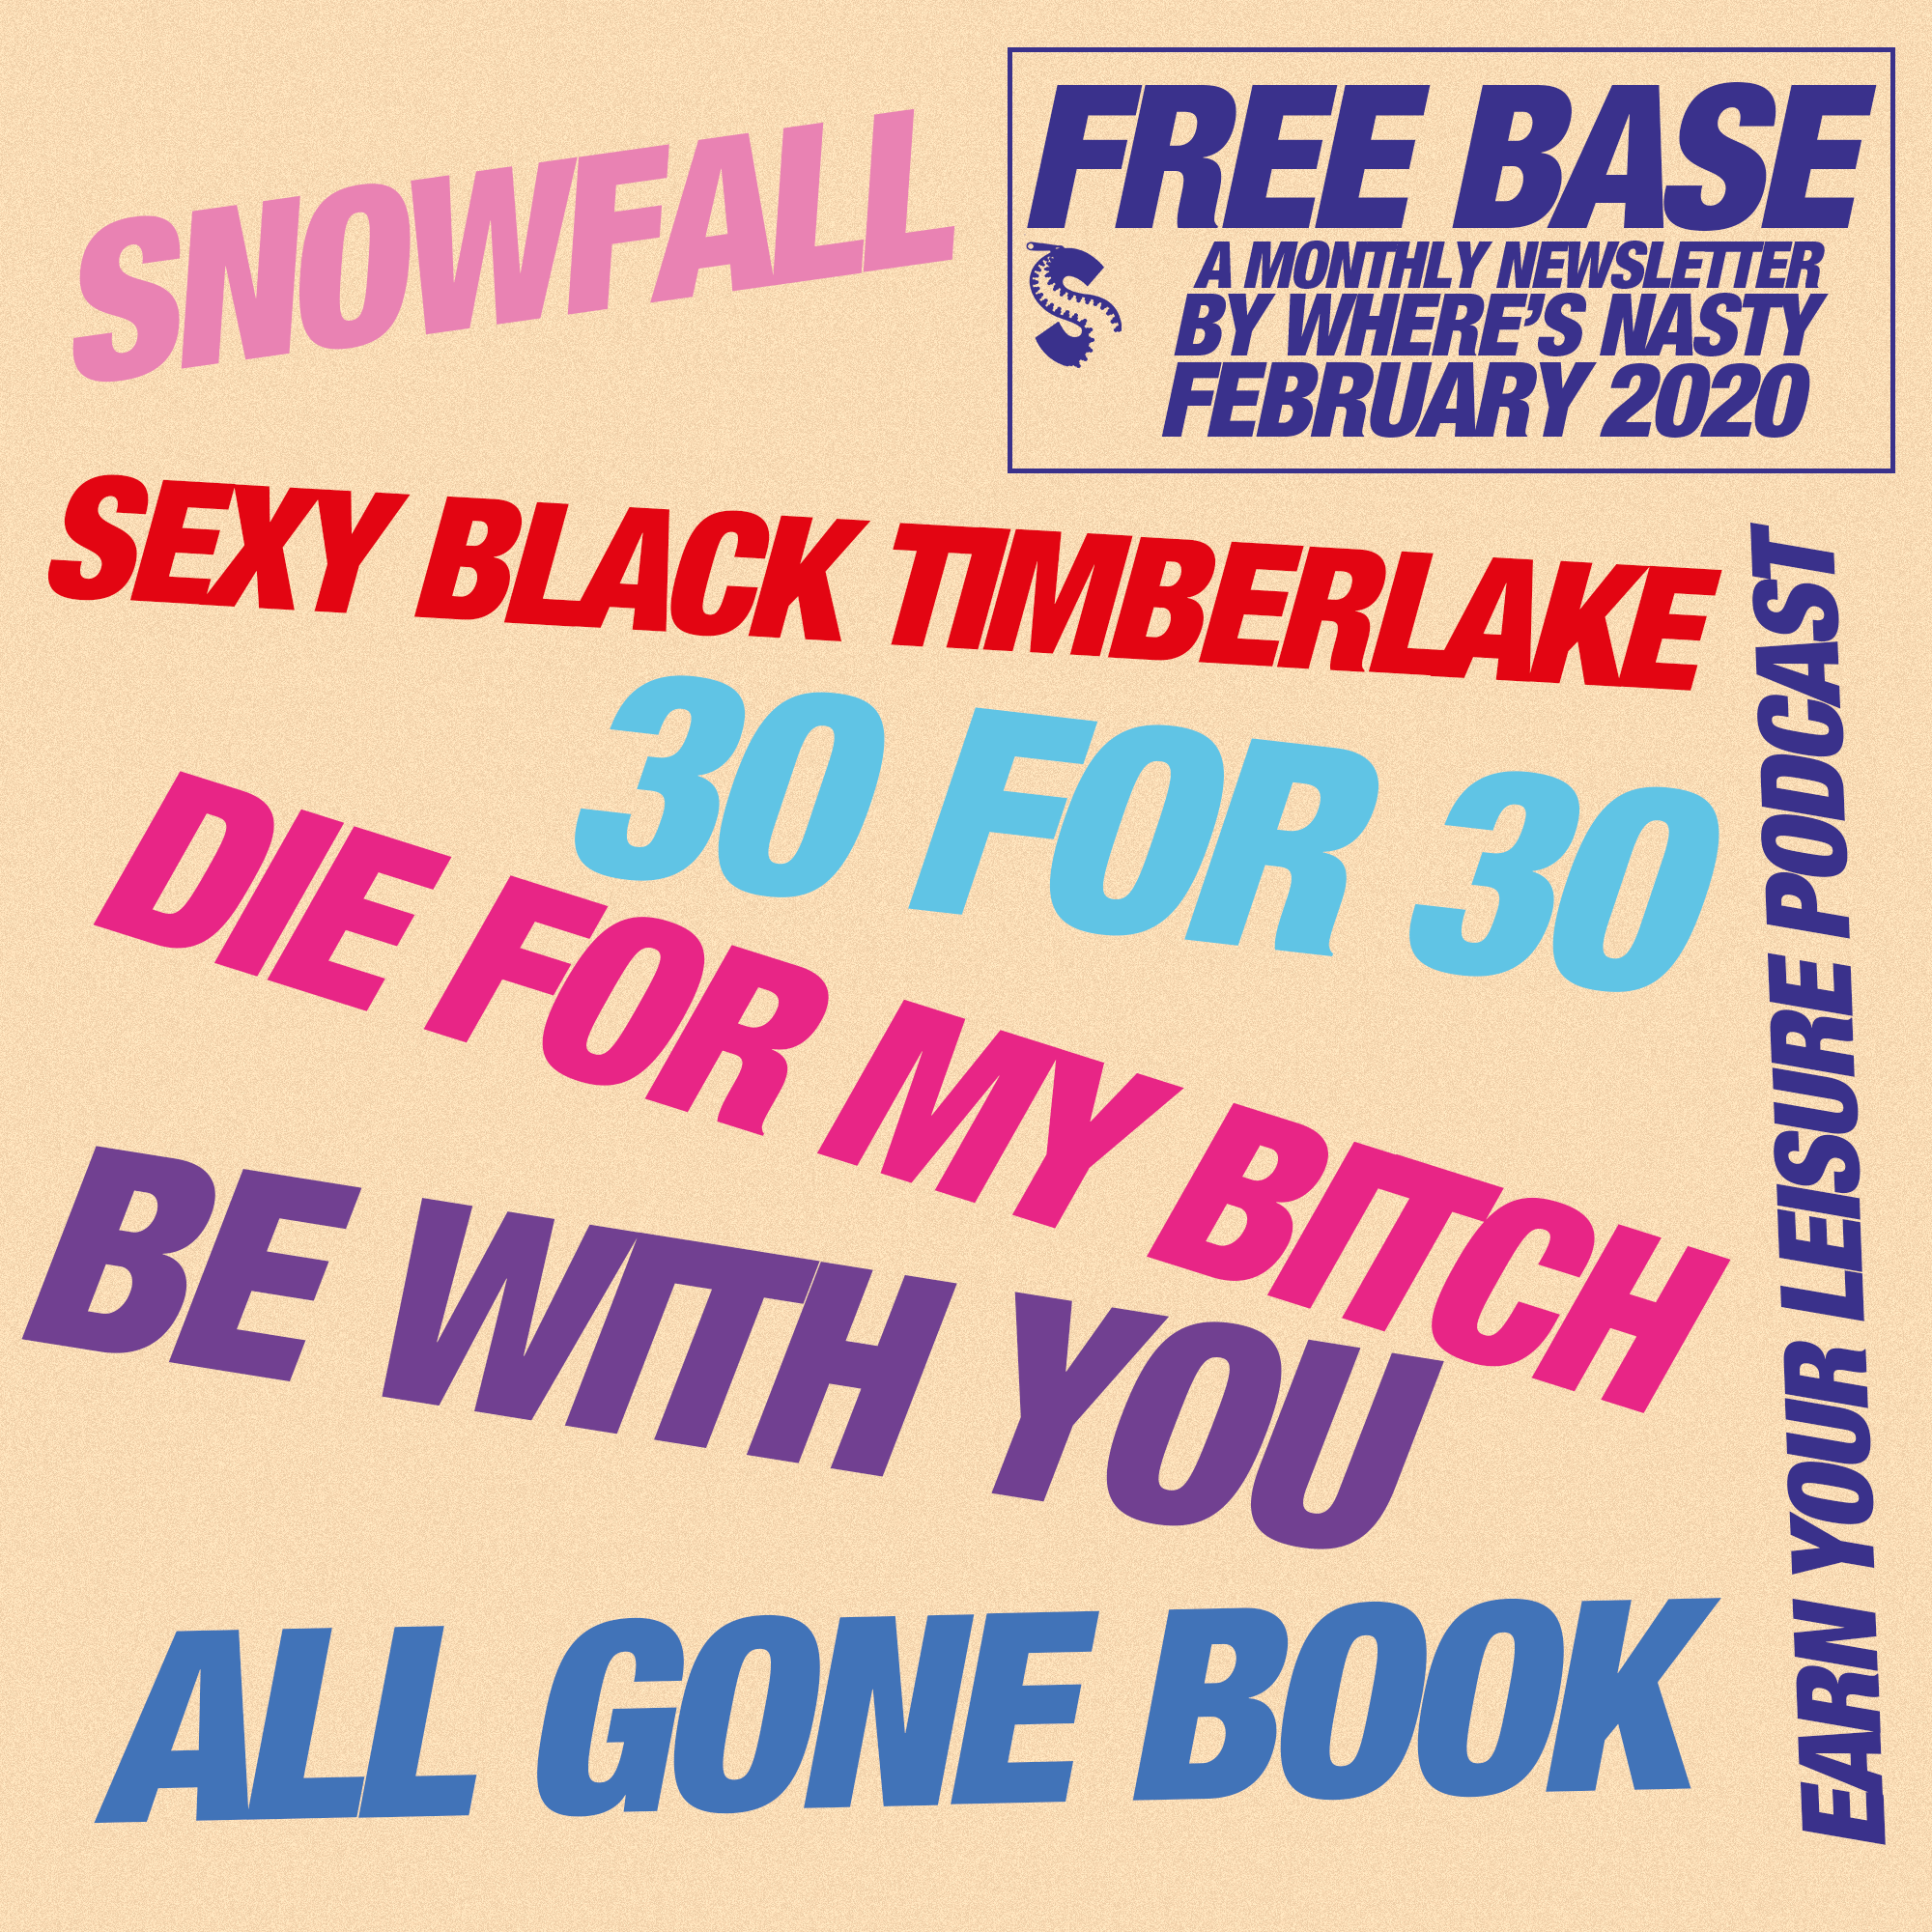 FREE BASE FEBRUARY 2020.png